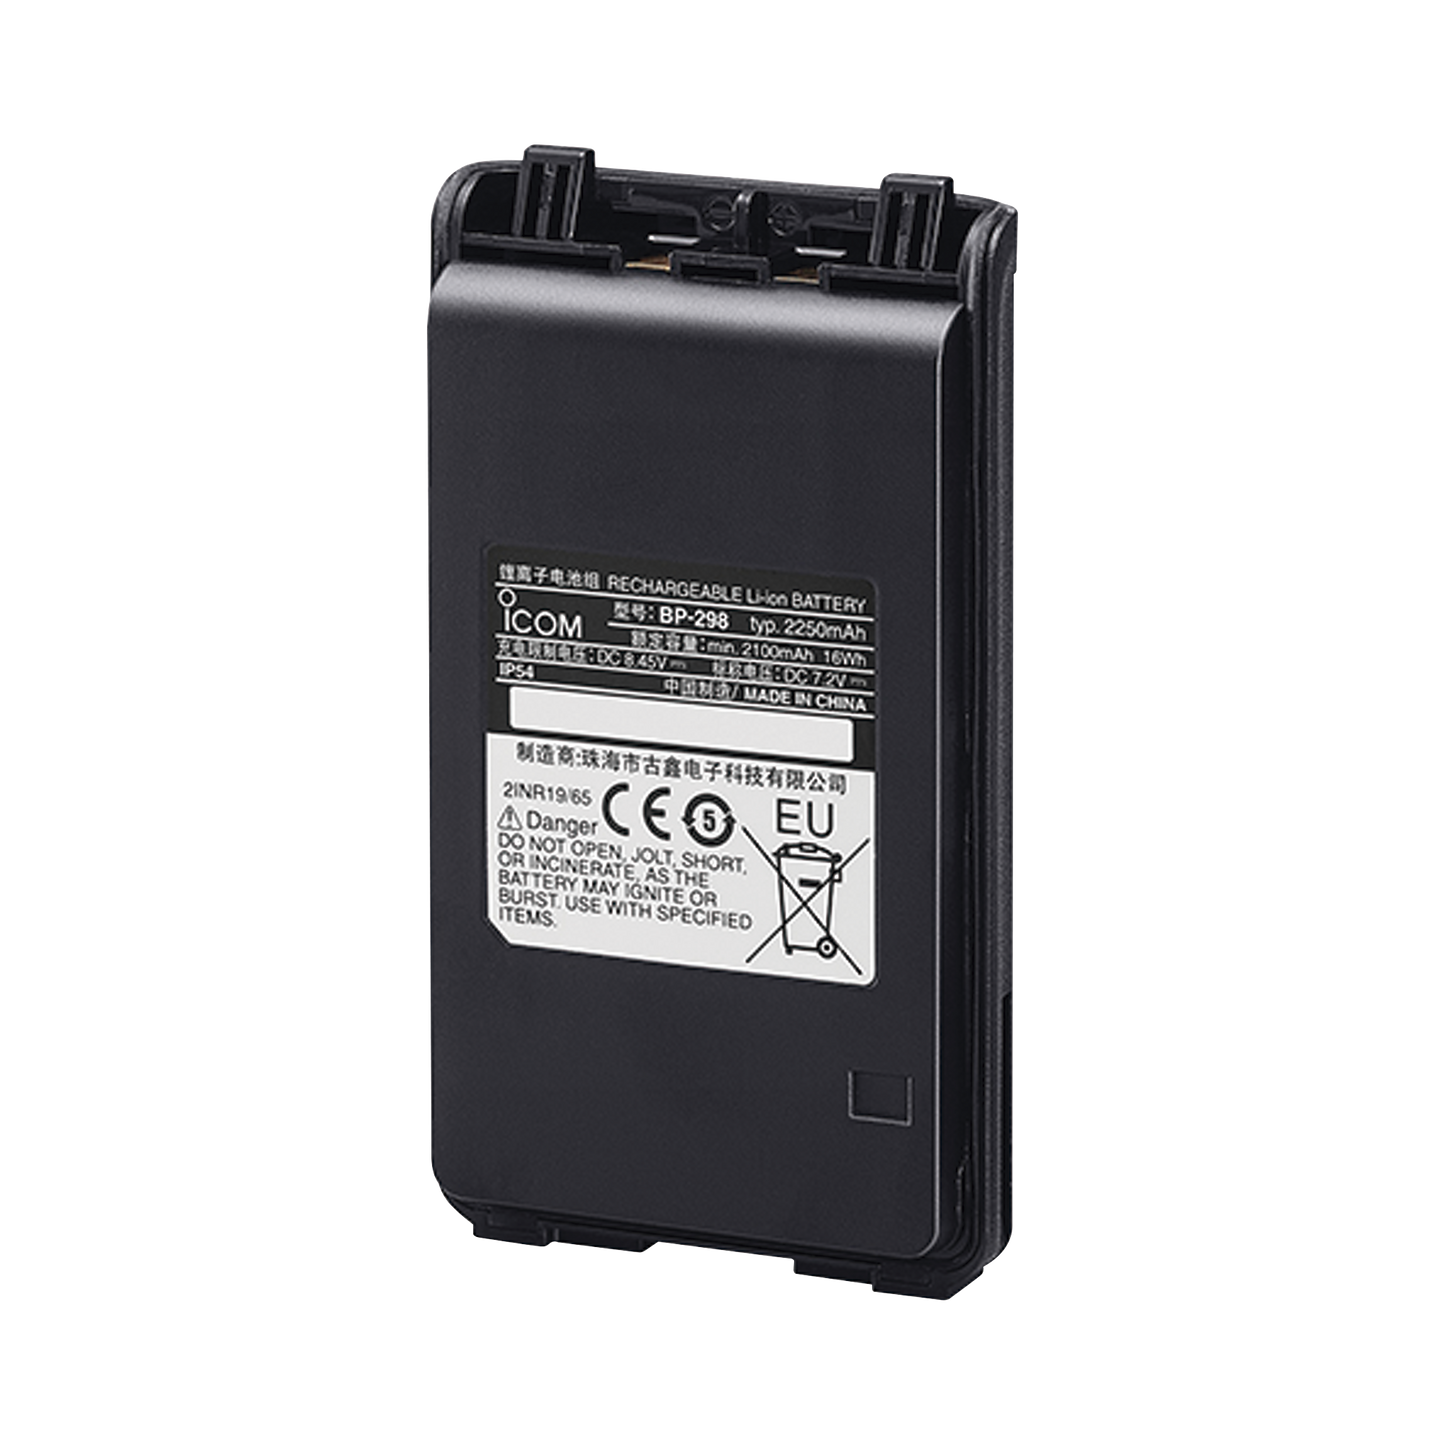 2250mAh Li-ion Battery for the ICV86